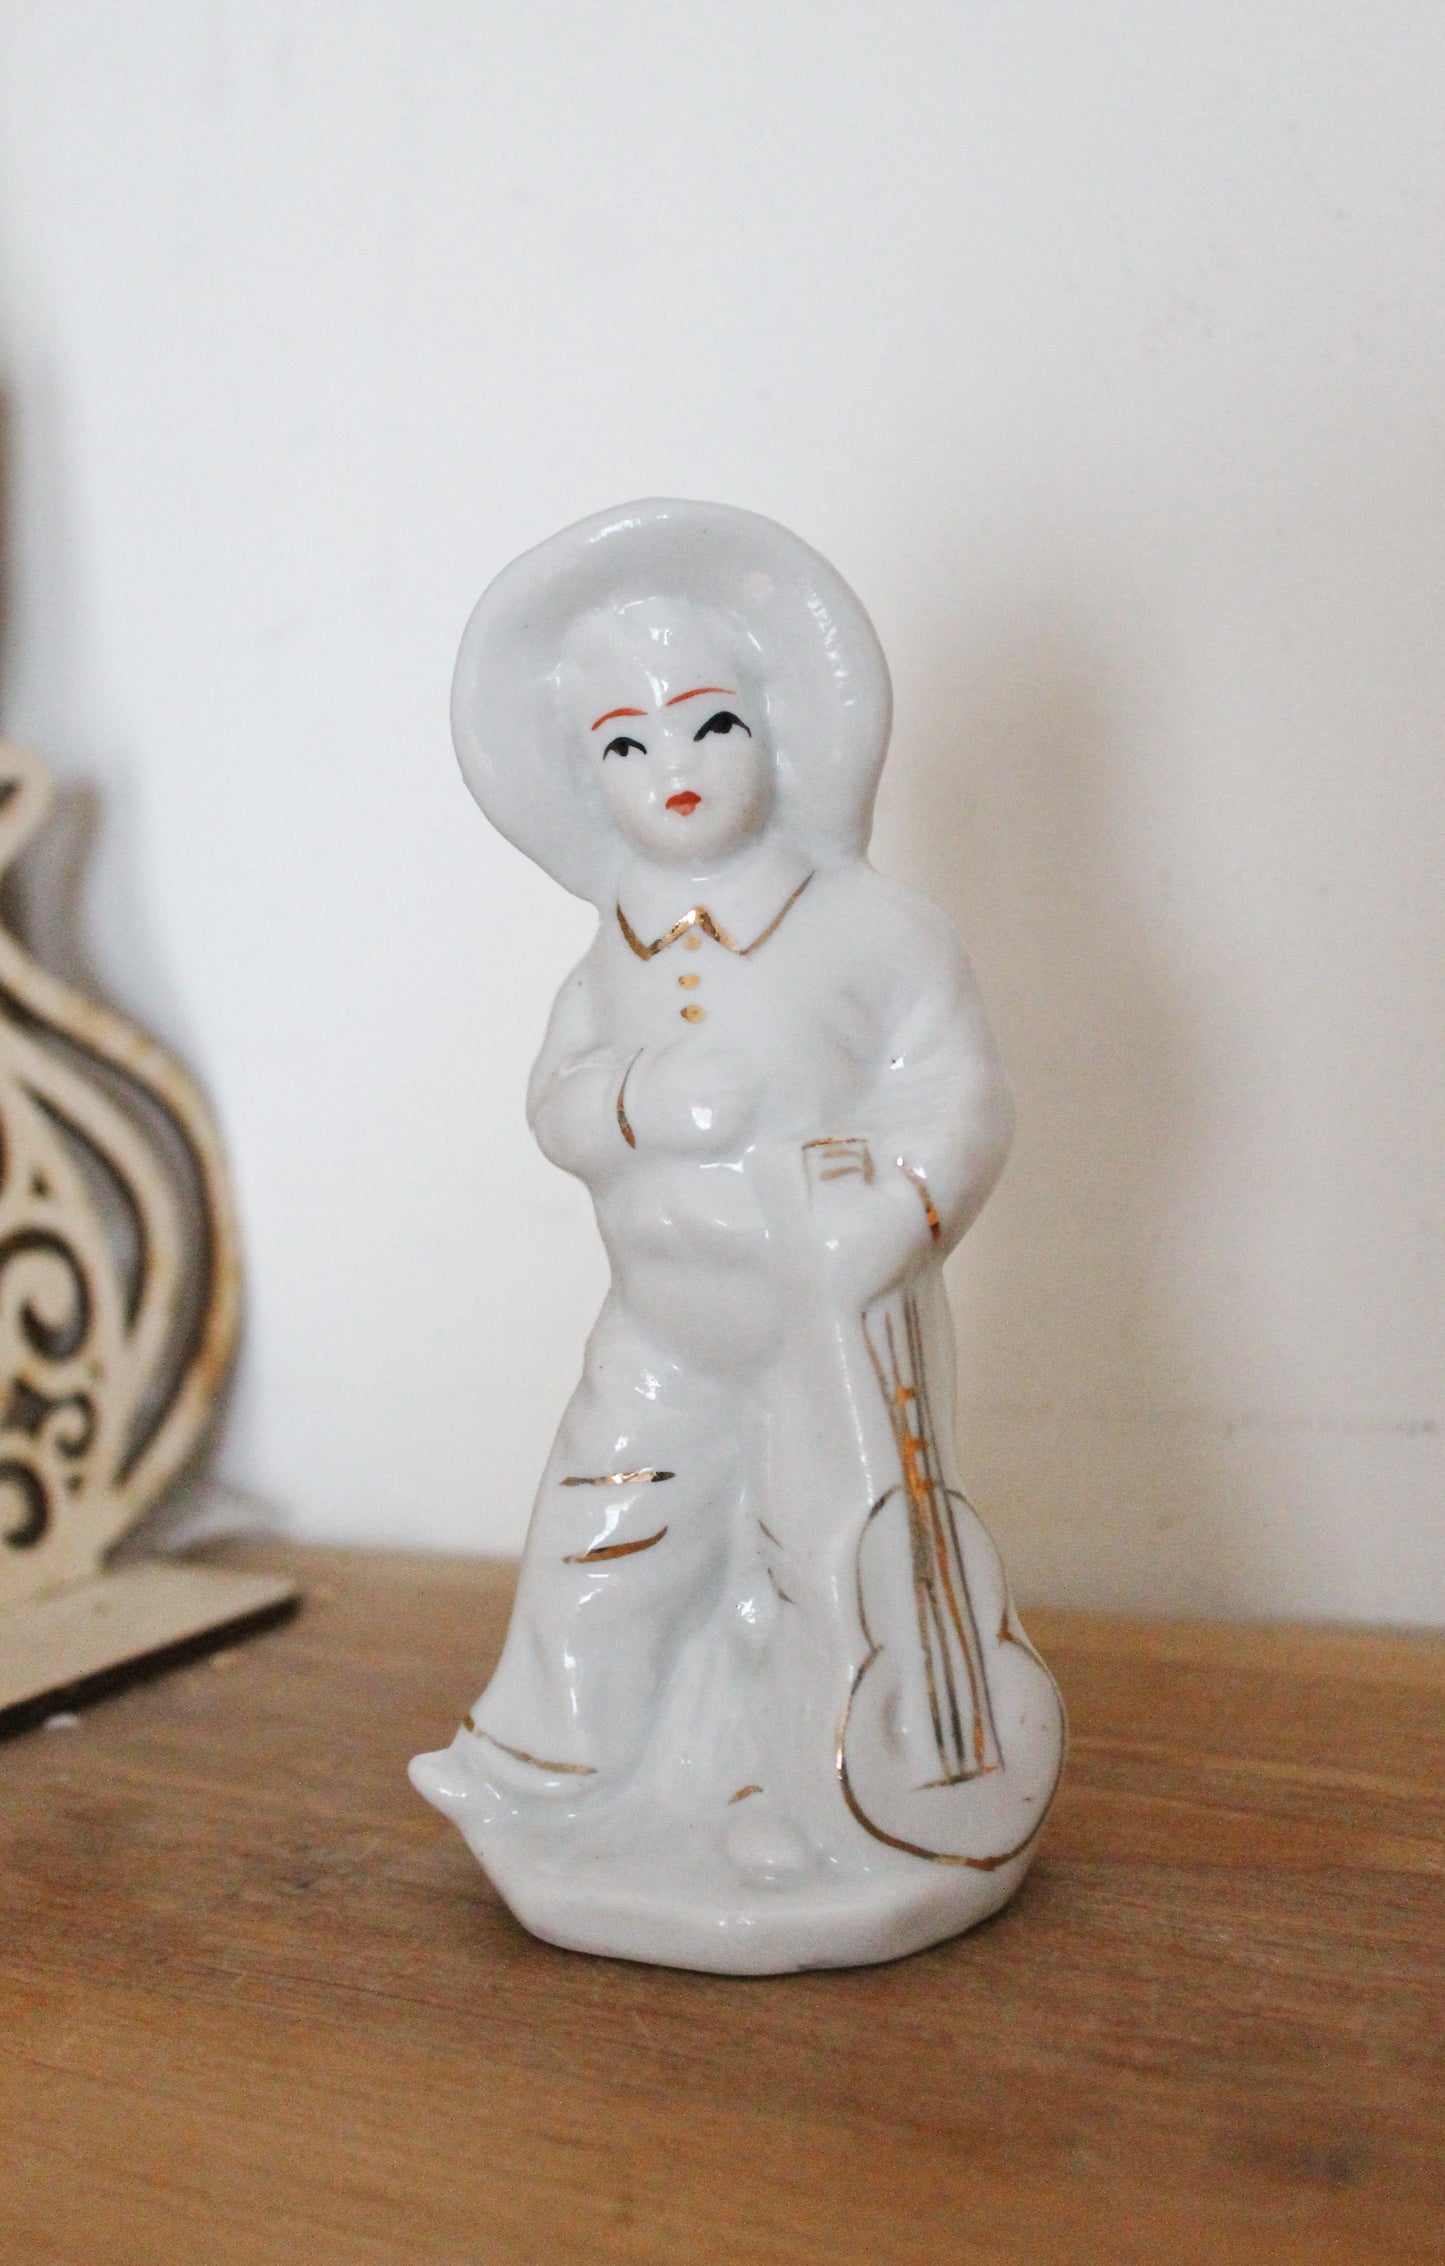 Vintage Porcelain - A Boy with his guitar - Germany porcelain figurine - vintage decor - Germany vintage - 1990s